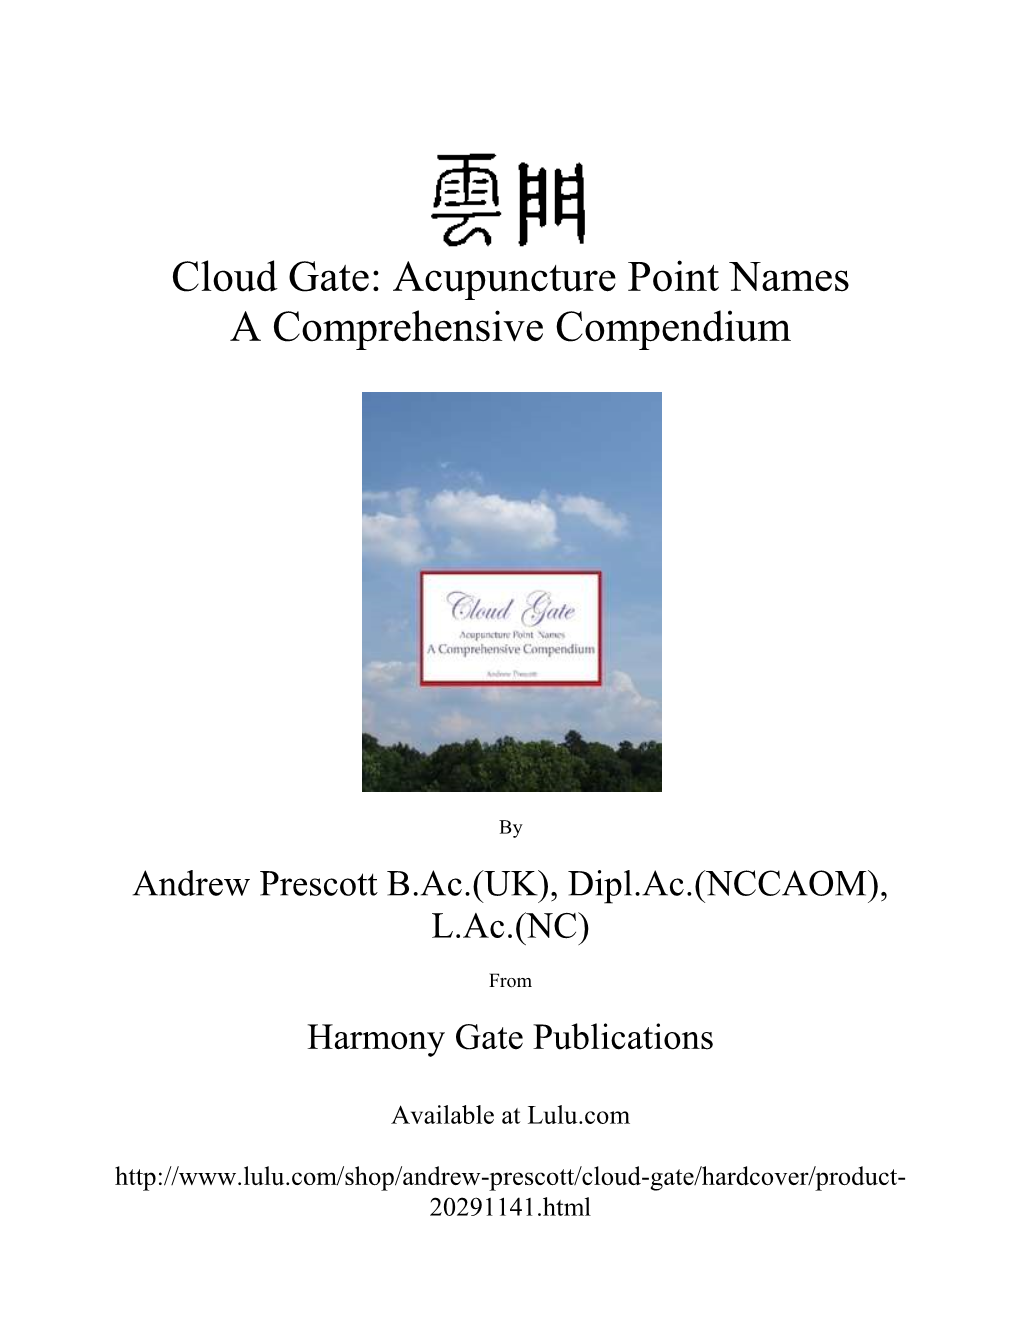 Cloud Gate: Acupuncture Point Names a Comprehensive Compendium